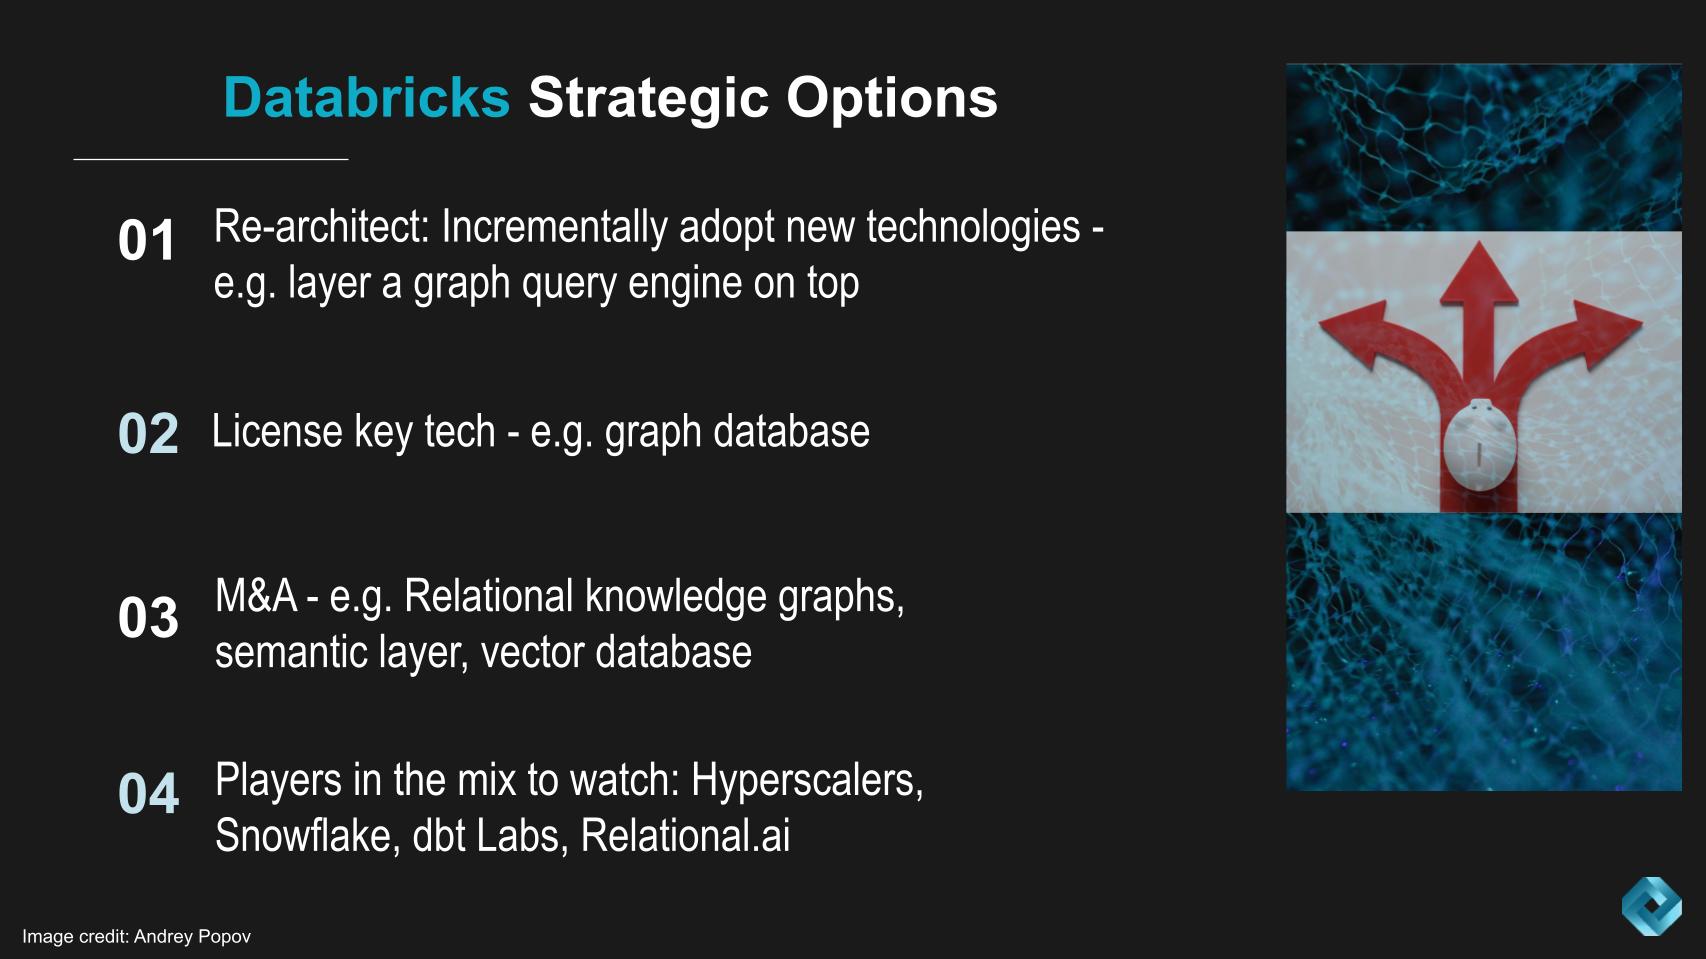 Databricks strategic options